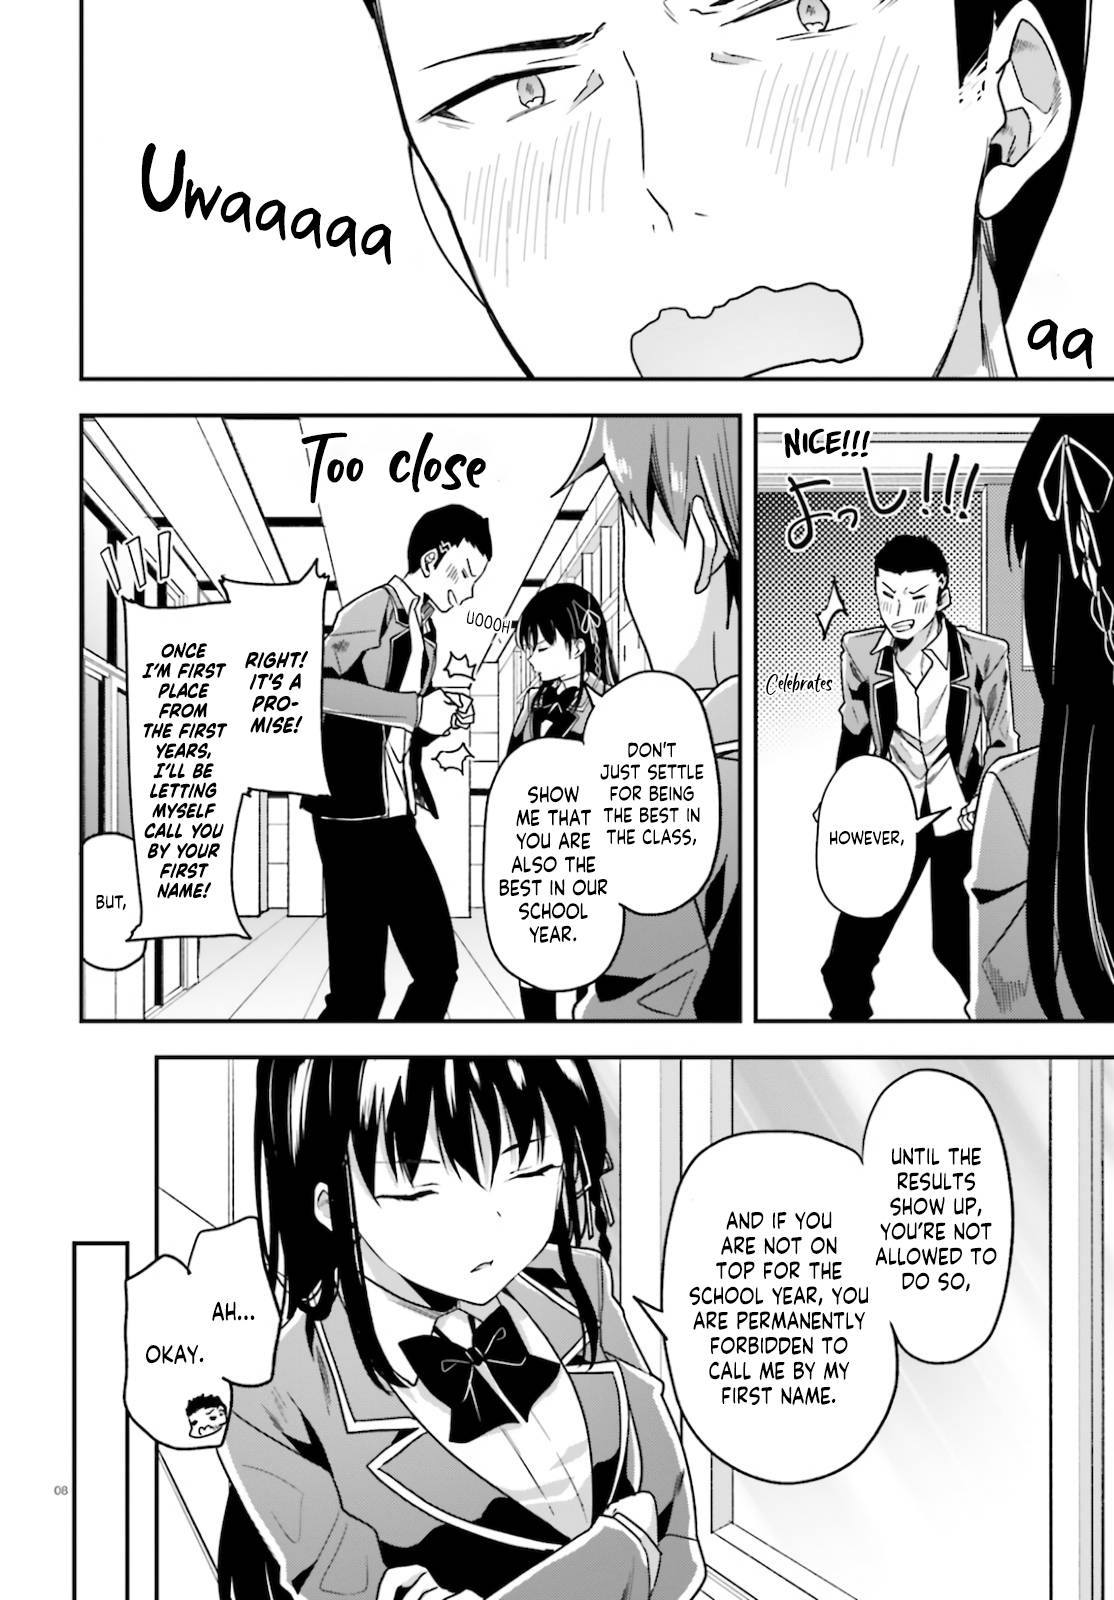 This is the best manga panel yet : r/ClassroomOfTheElite